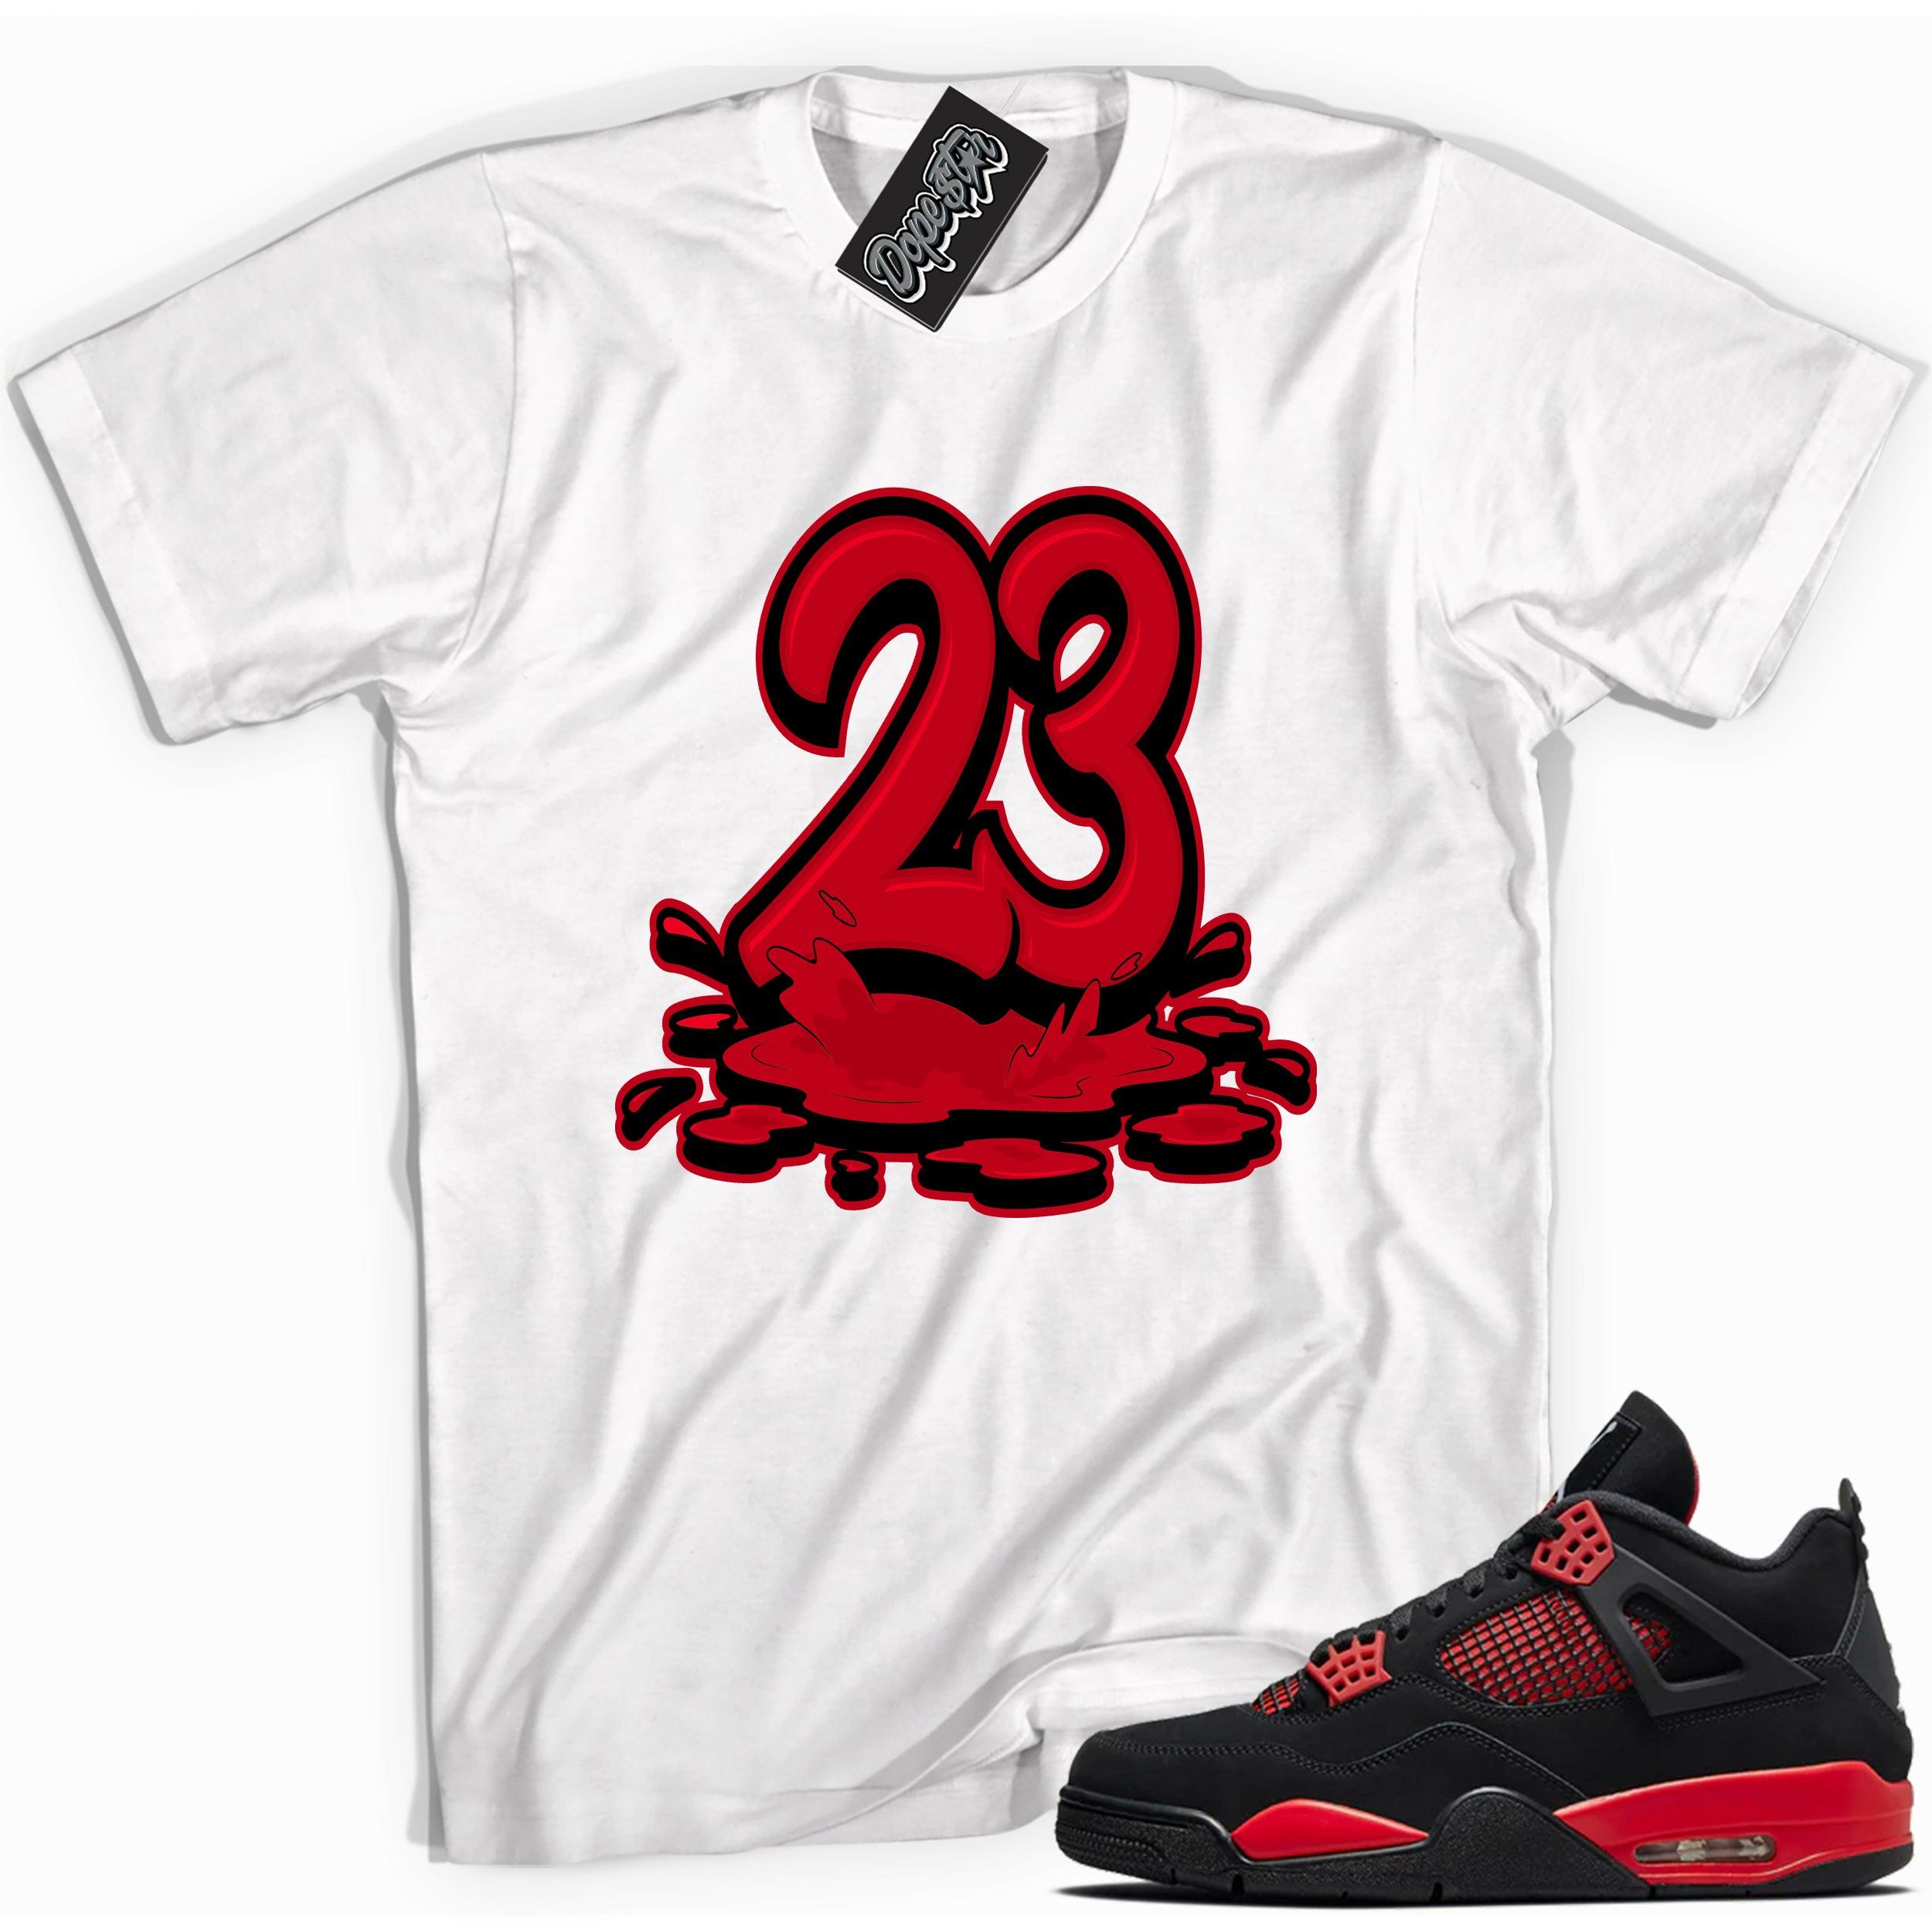 Number 23 Melting Shirt Air Jordan 4 Red Thunder photo